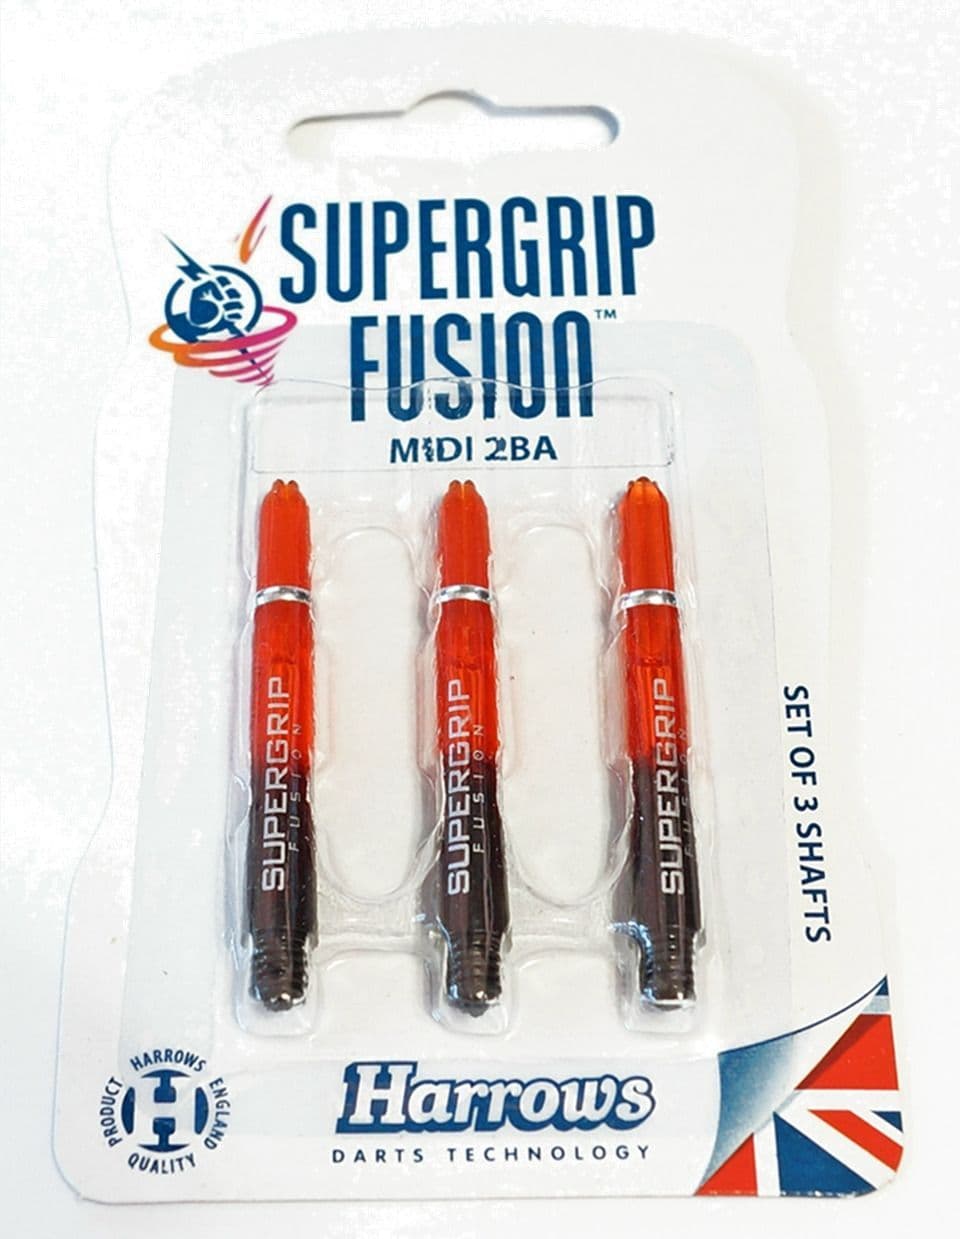 Harrows Supergrip Fusion Midi 2BA Dart Stems/Shafts Two Tone Transparent